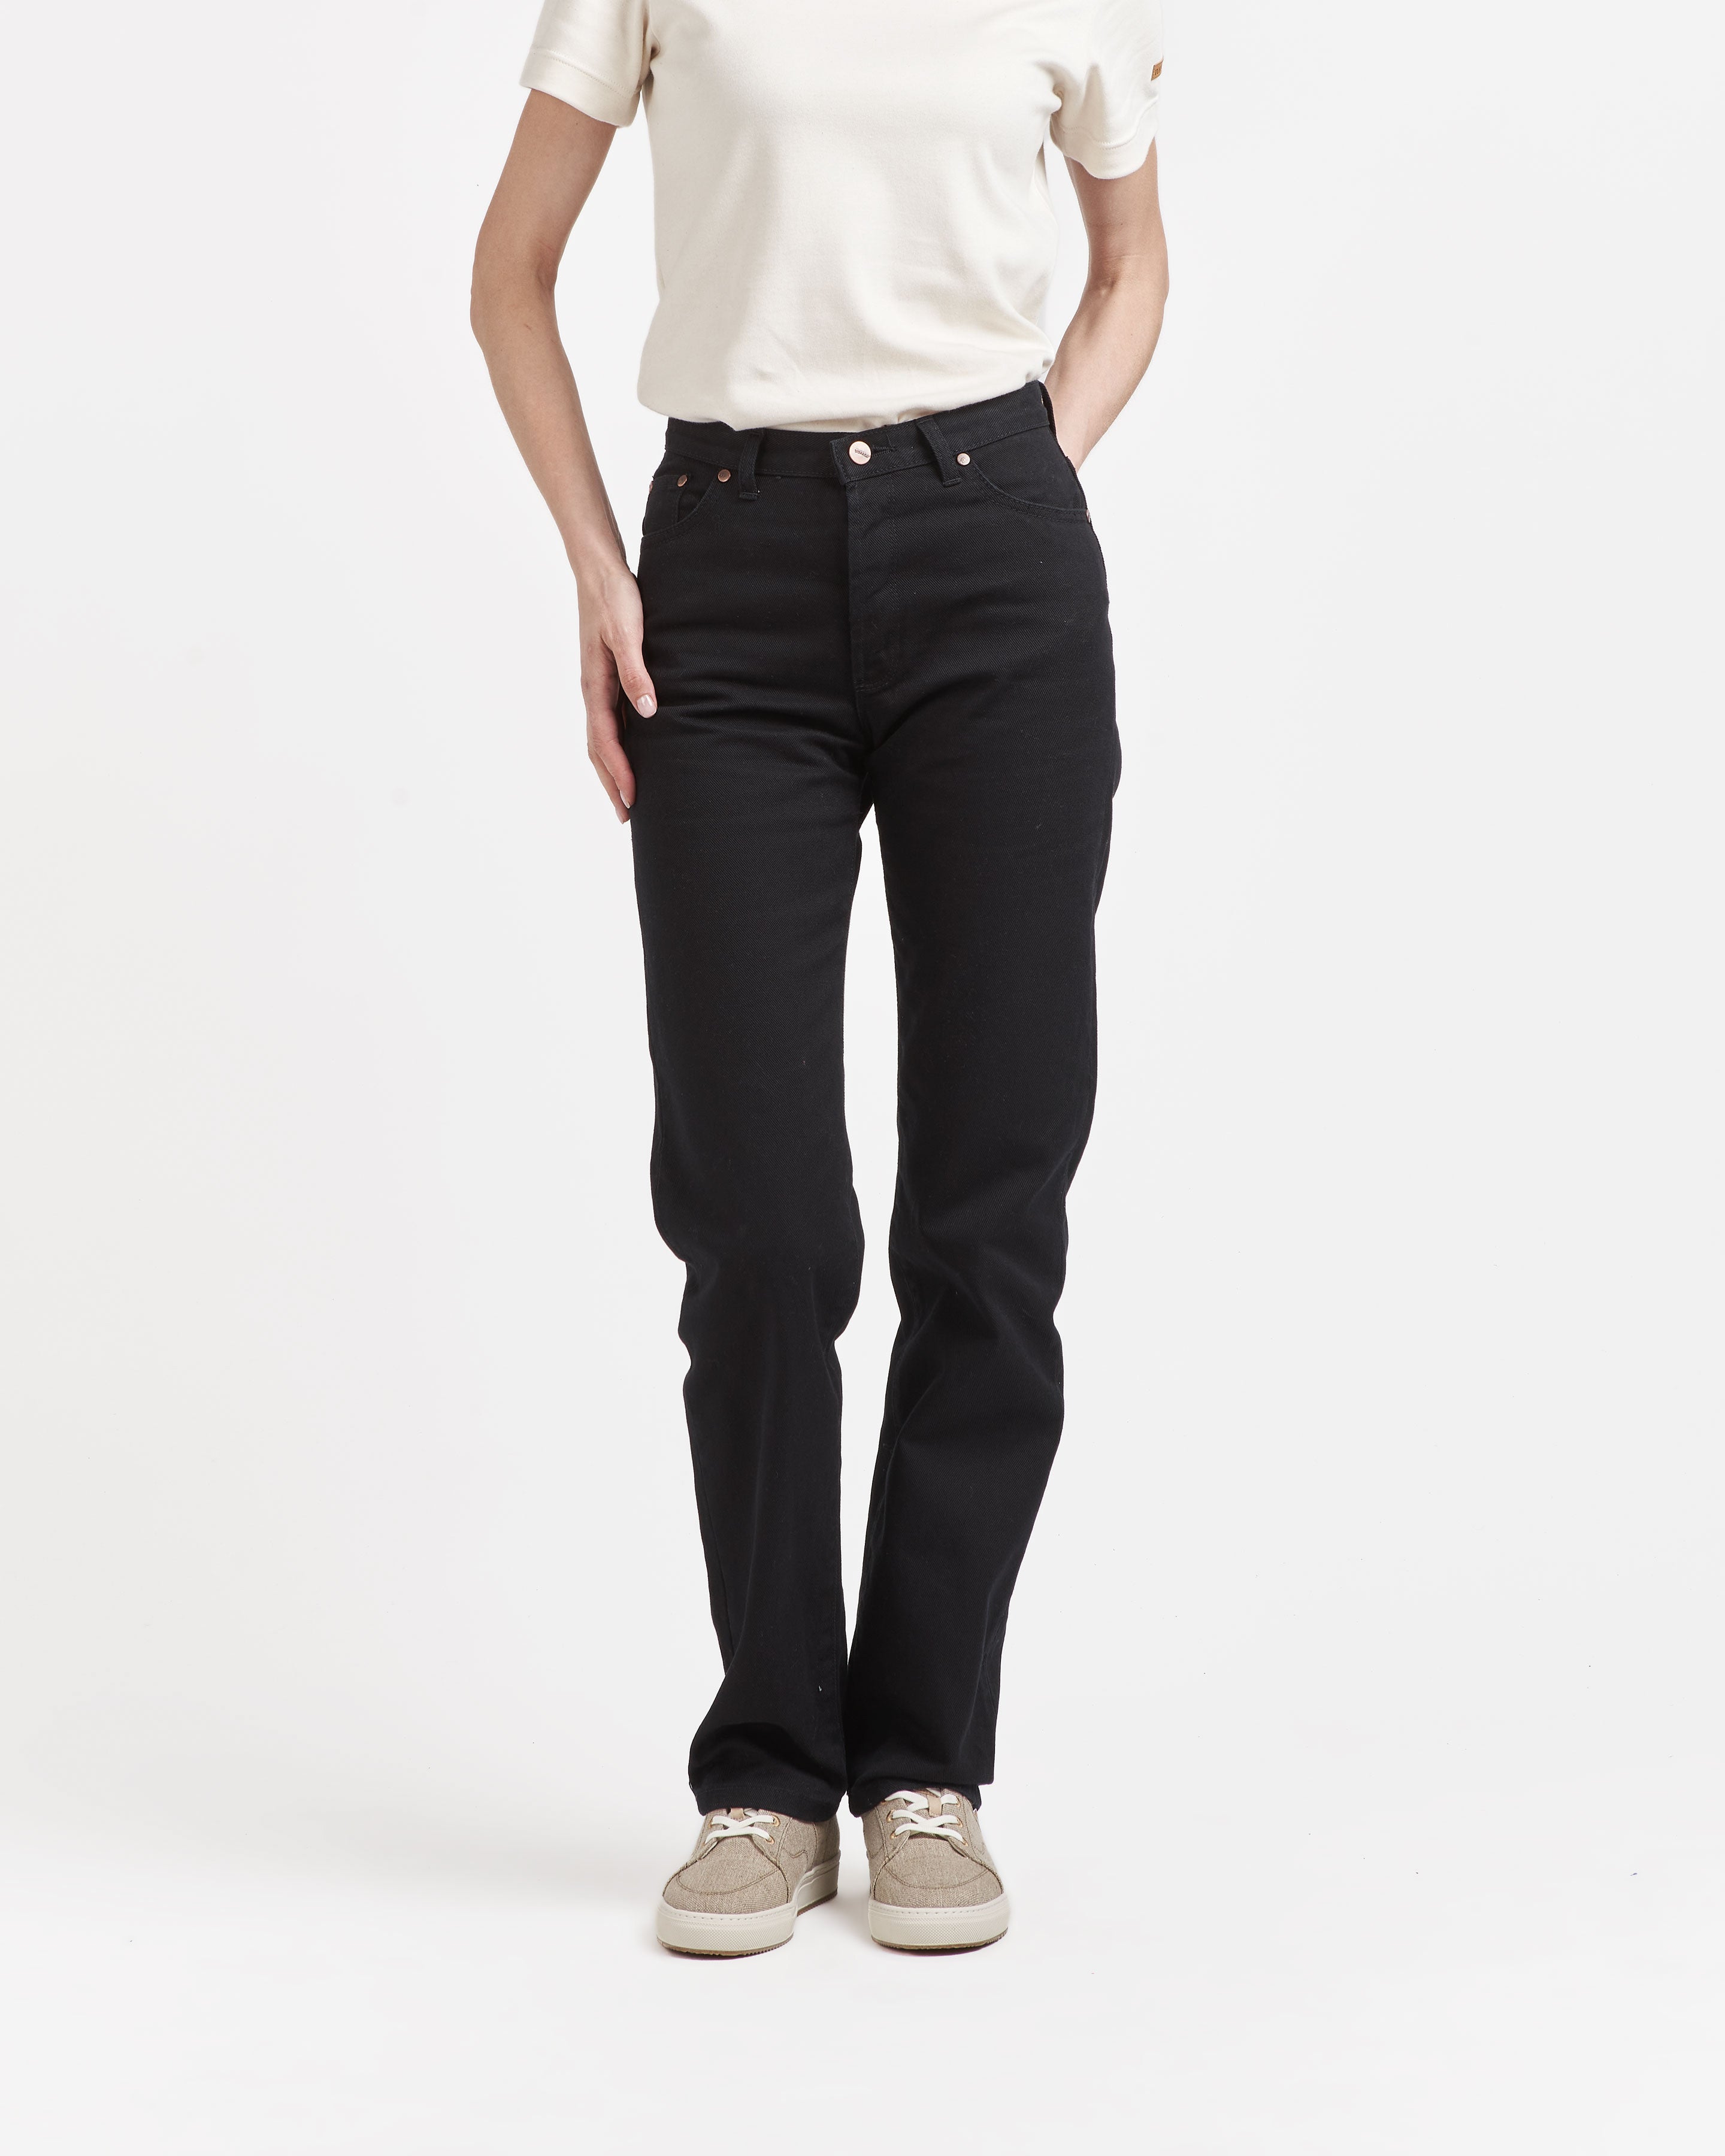 Black high-waisted straight women's jeans - Apolline – Atelier Tuffery